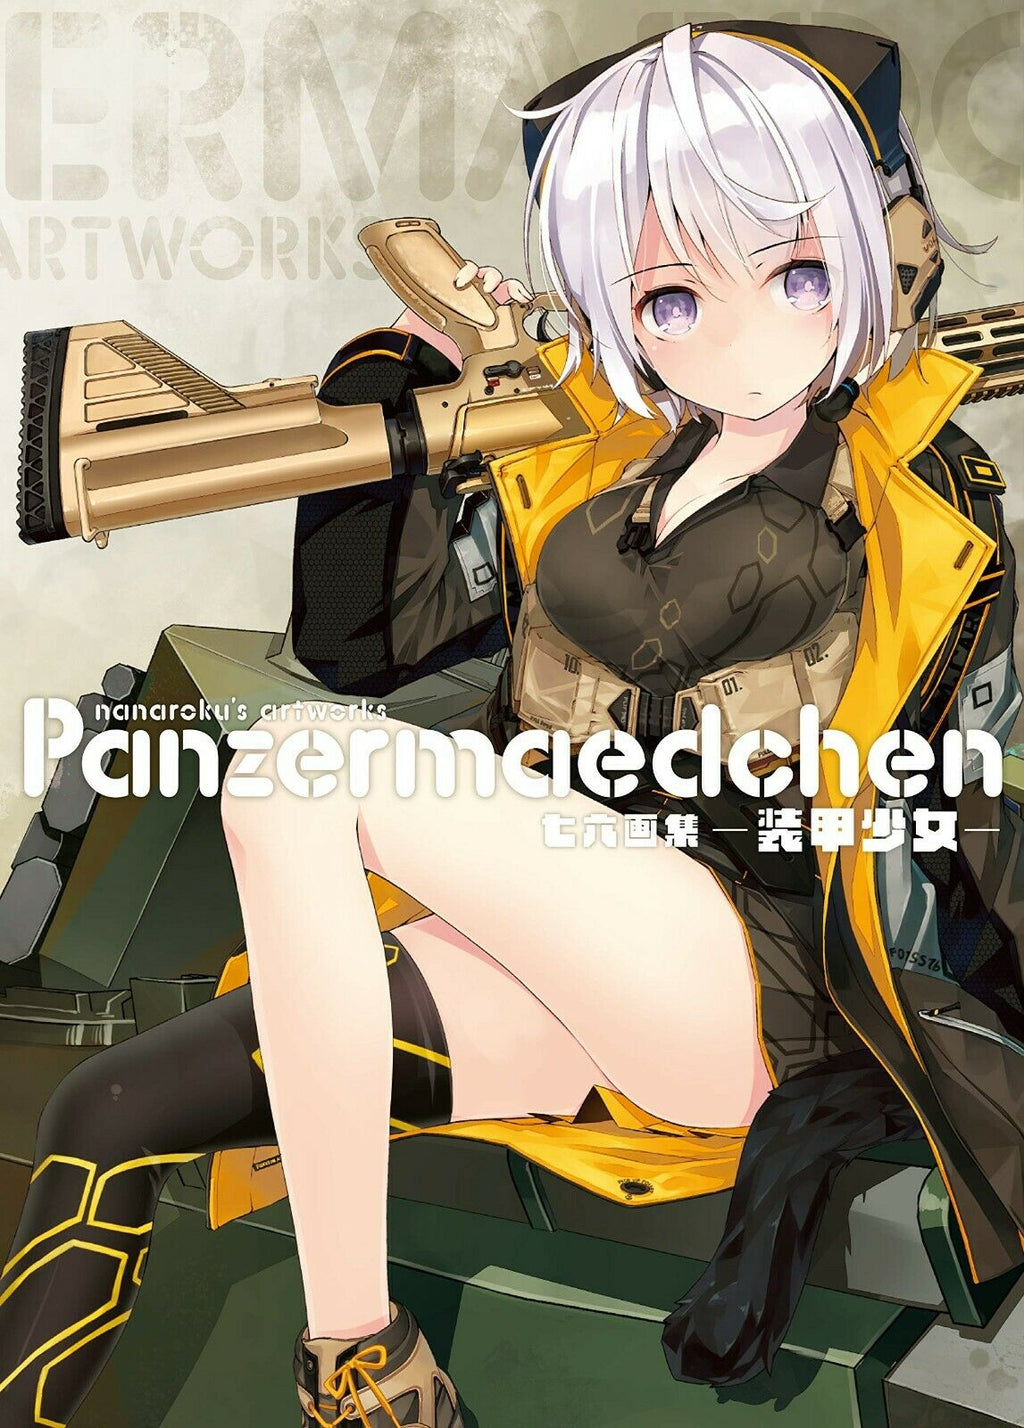 NEW' Nanaroku Artworks Panzermaedchen | JAPAN Anime Game Art Book